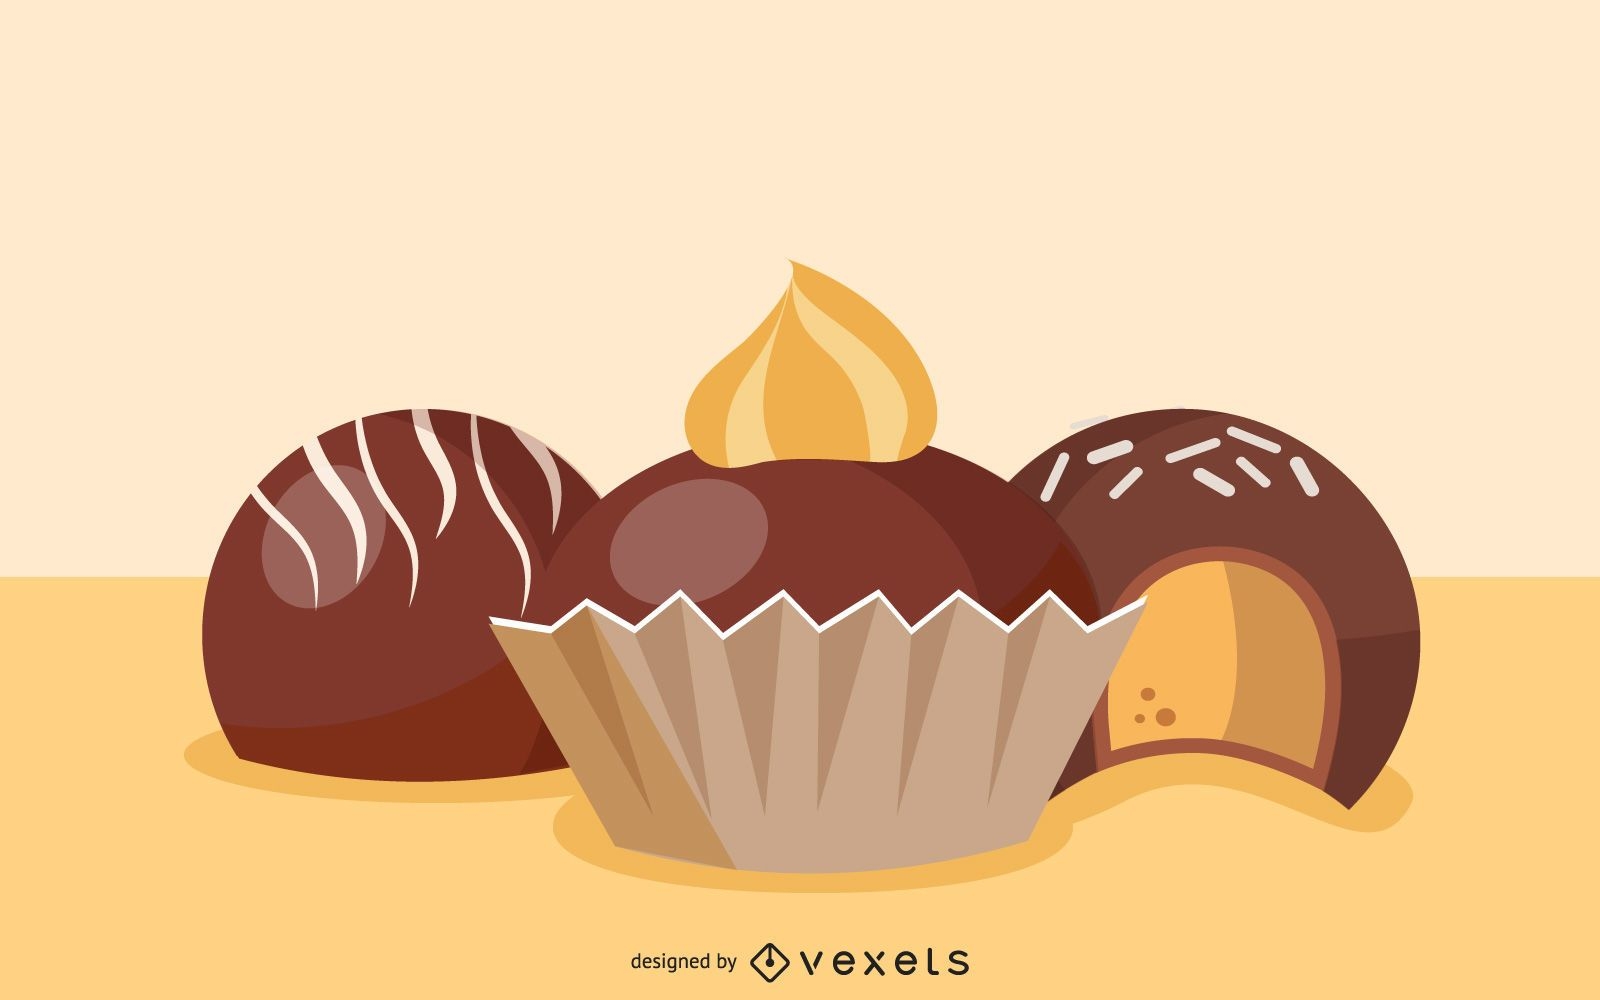 Chocolate truffles illustration design